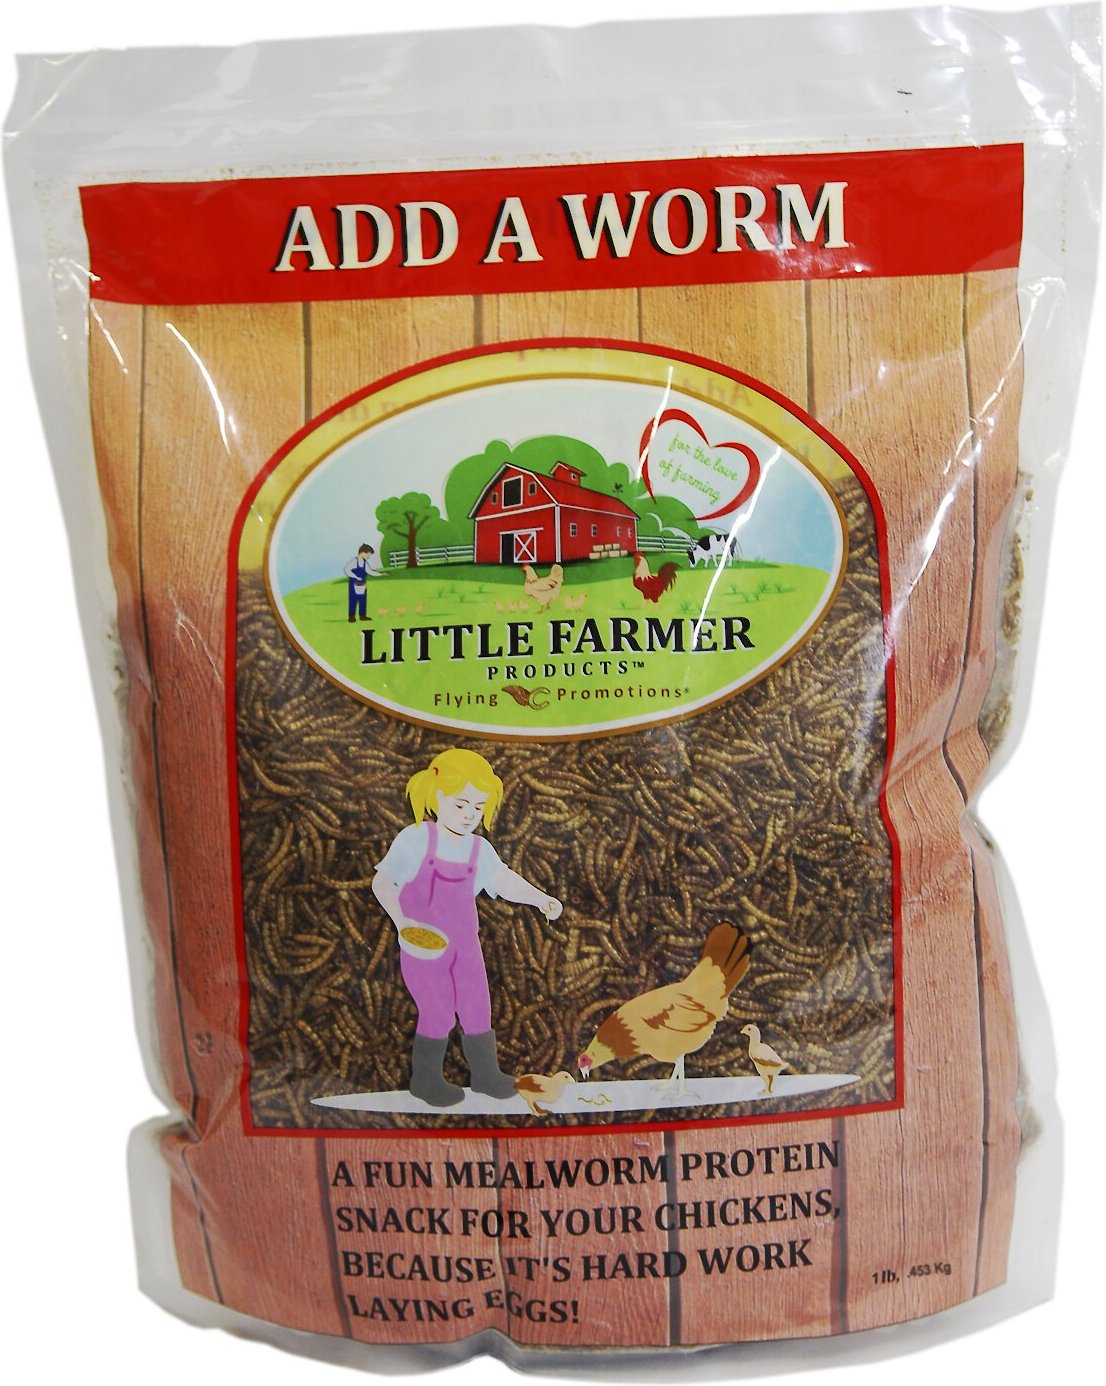 Little Farmer Products Add a Worm Chicken Treats, 1-lb bag